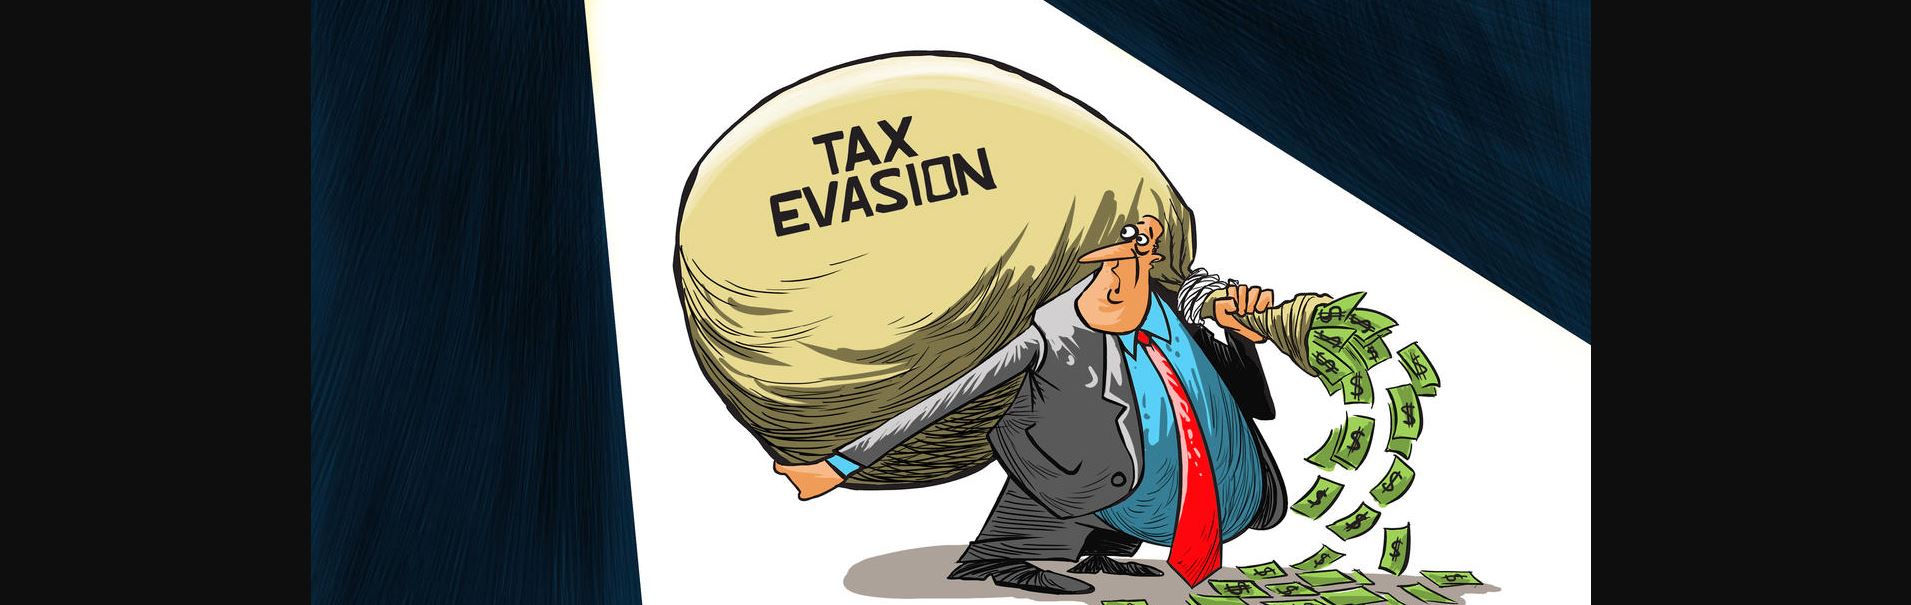 Evasion fiscale